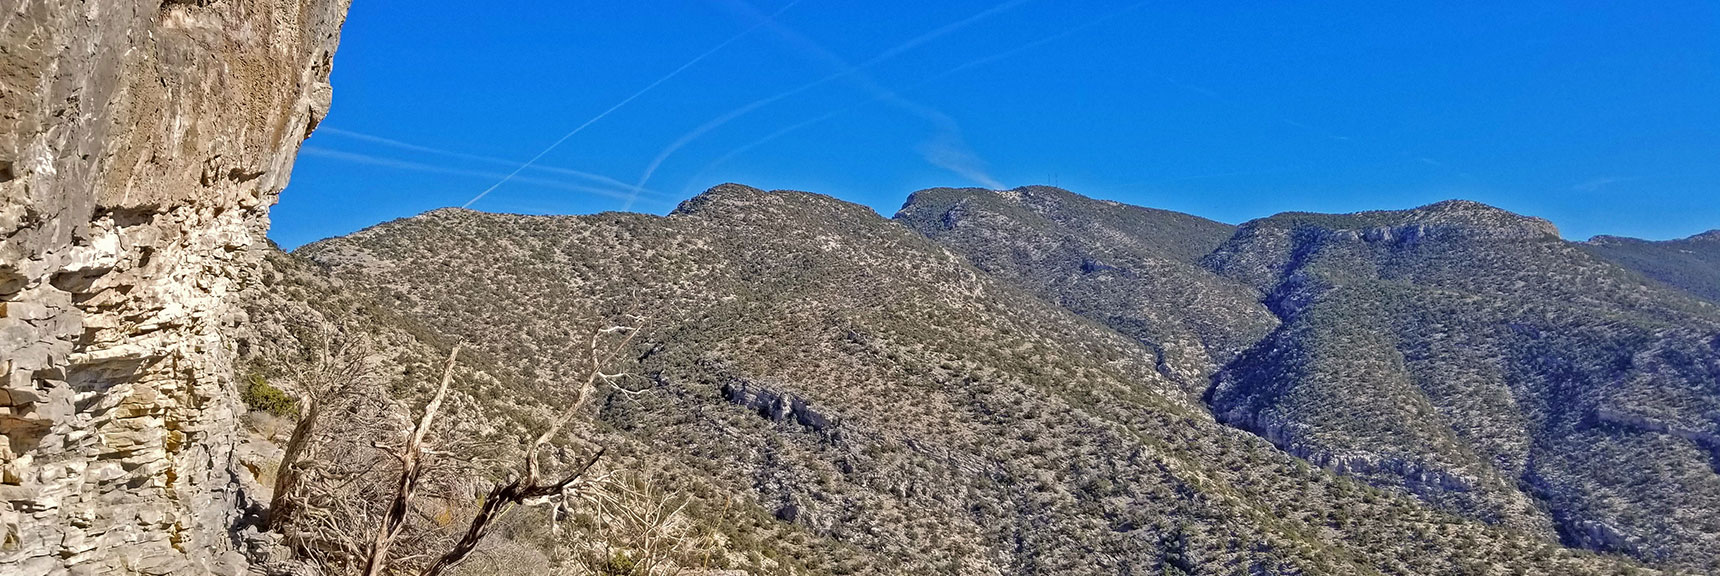 View of Summit Cliff Line from Niche Opening in 3rd Cliff Bluff | Potosi Mt. Summit via Western Cliffs Ridgeline, Spring Mountains, Nevada